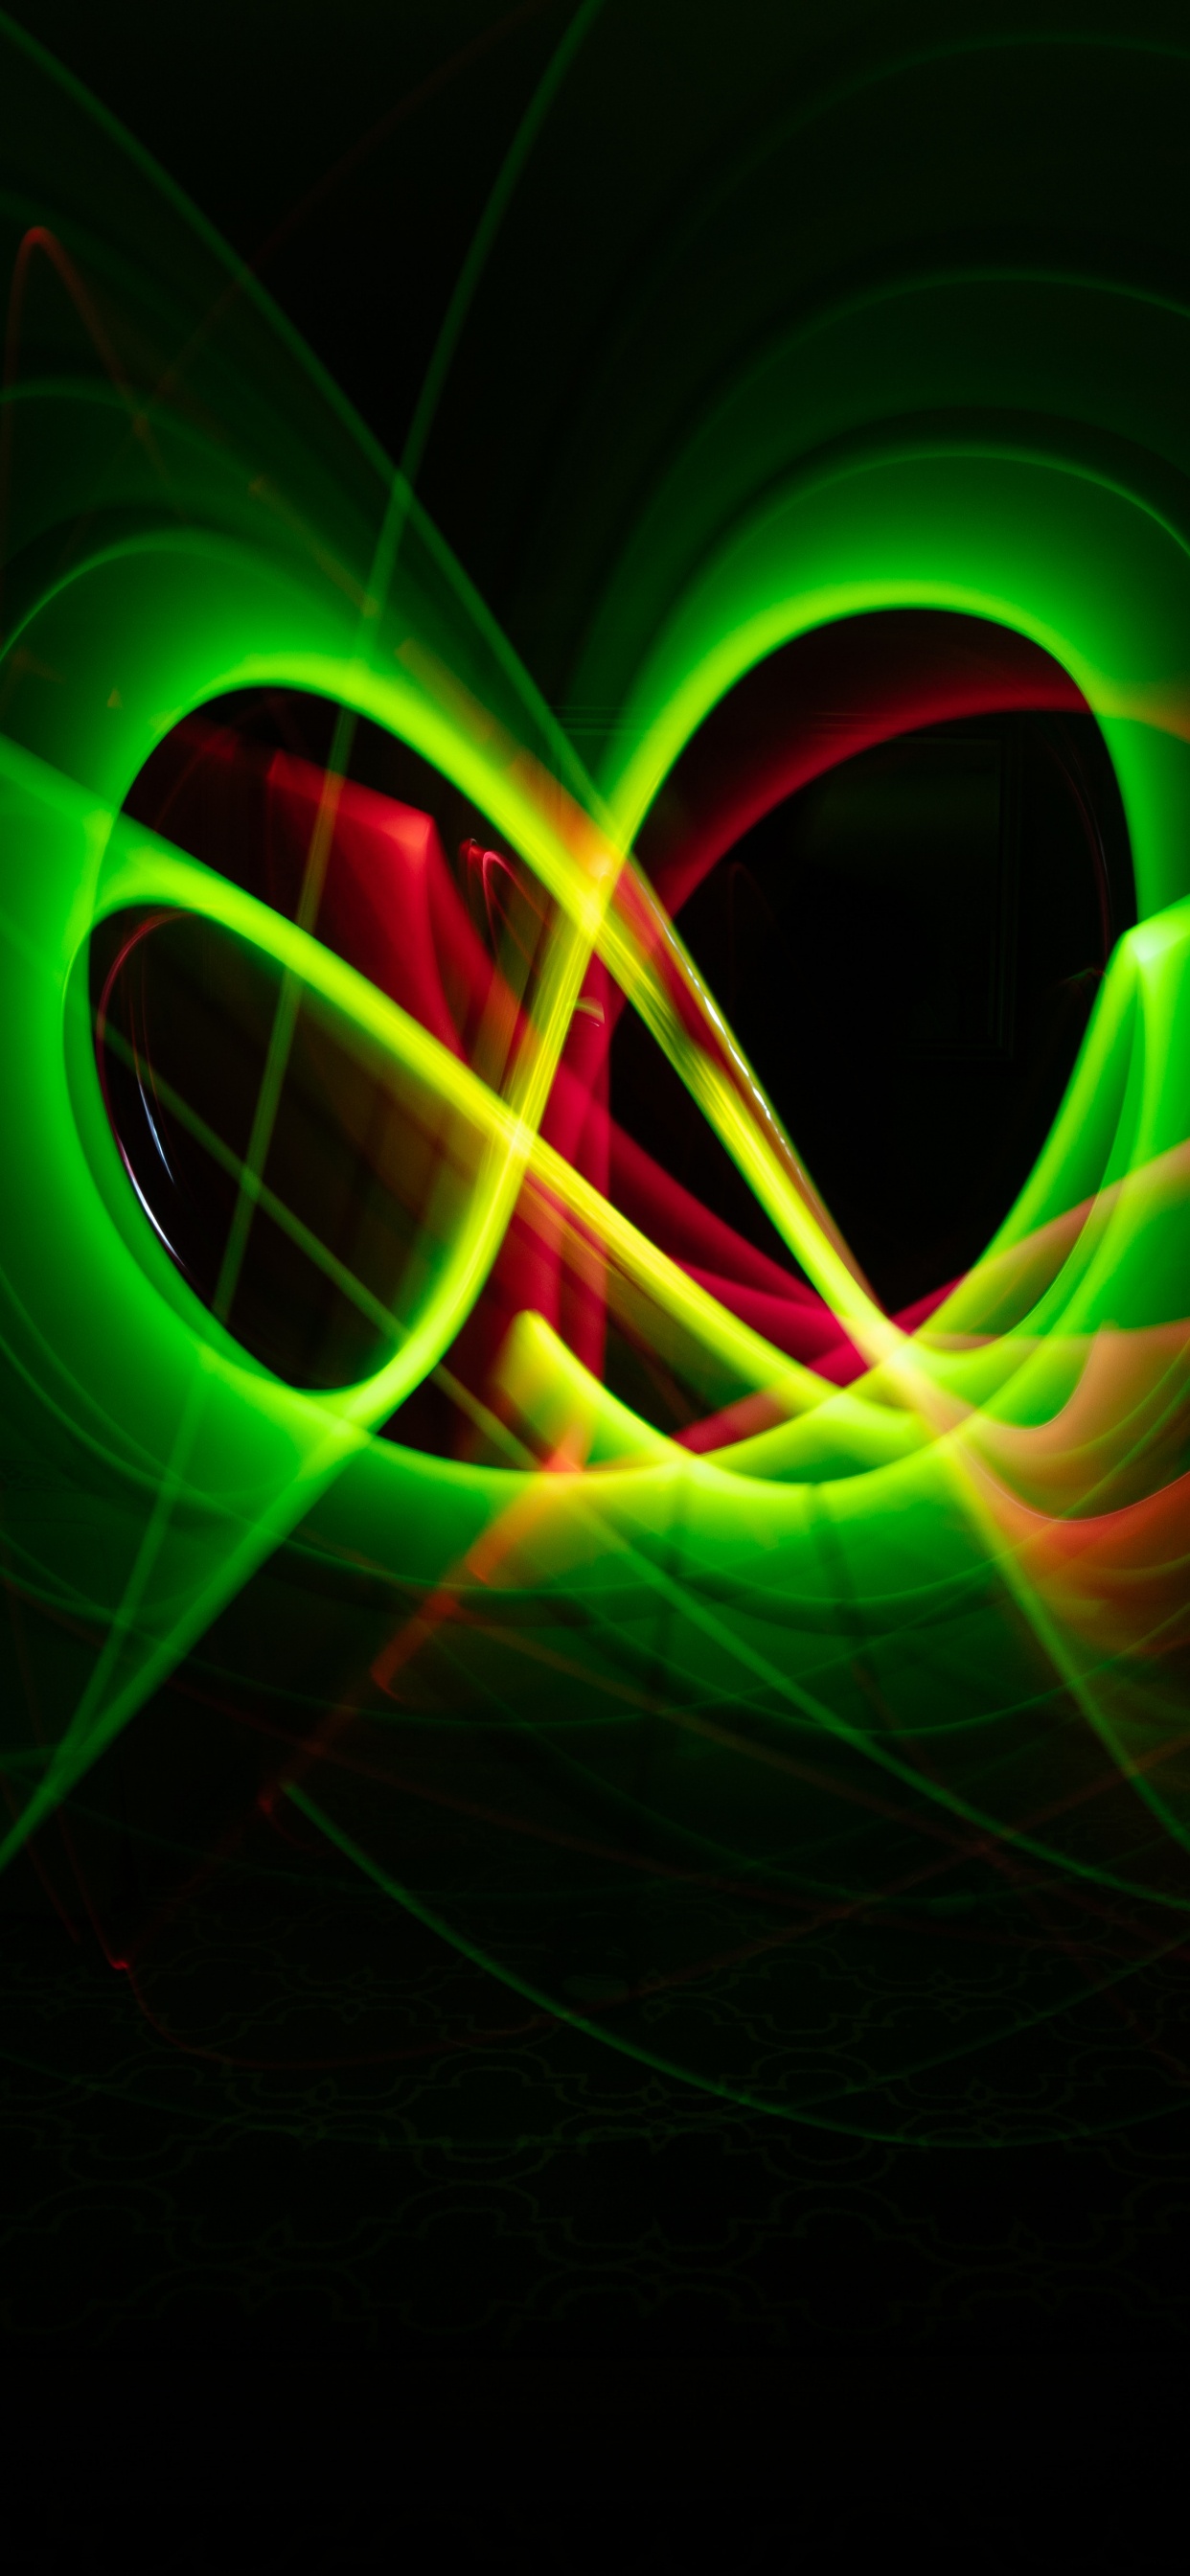 Green and Red Light Digital Wallpaper. Wallpaper in 1242x2688 Resolution